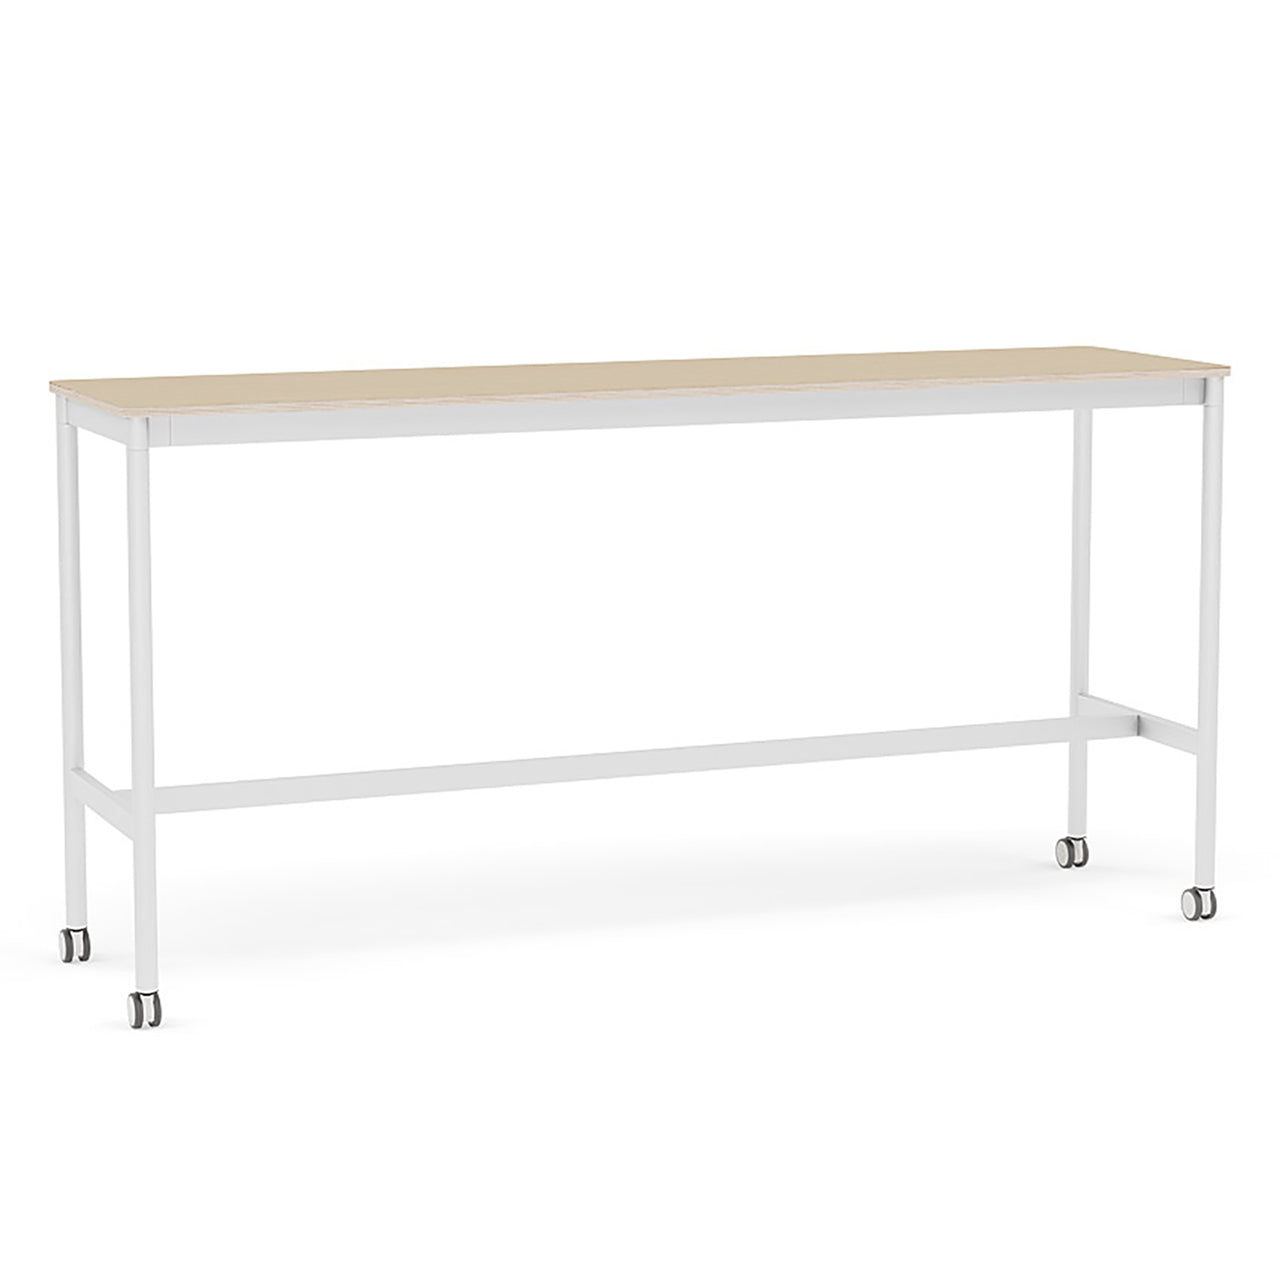 Base High Table with Castors: 190 + Oak Veneer + Plywood Edge + White